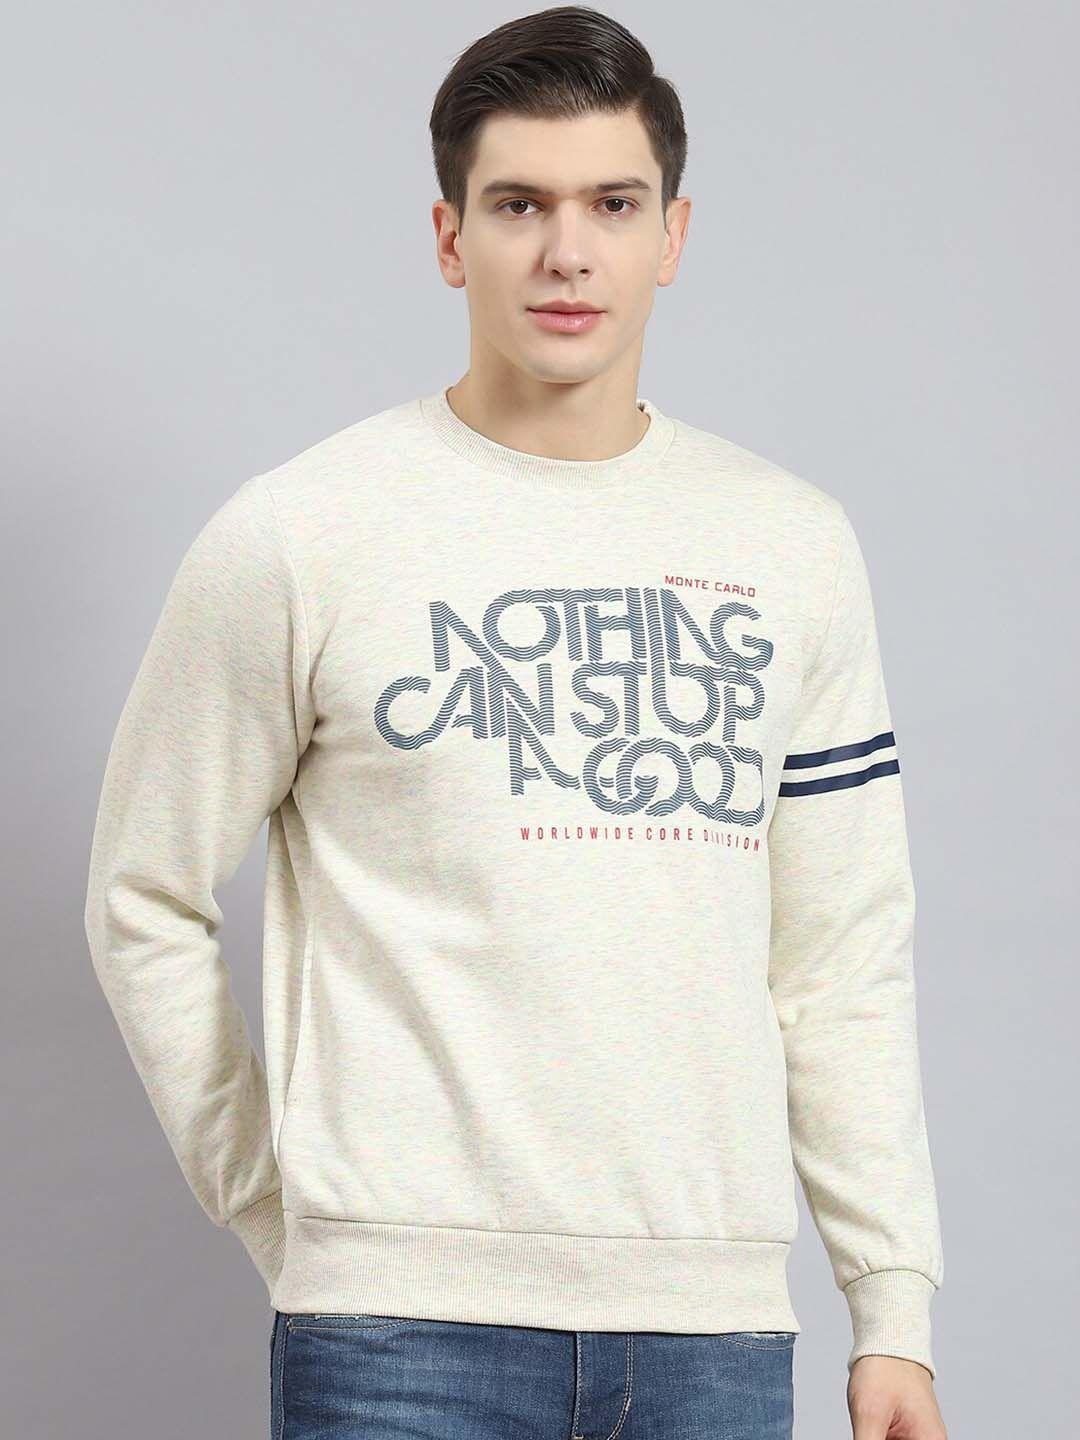 monte carlo typography printed round neck sweatshirt